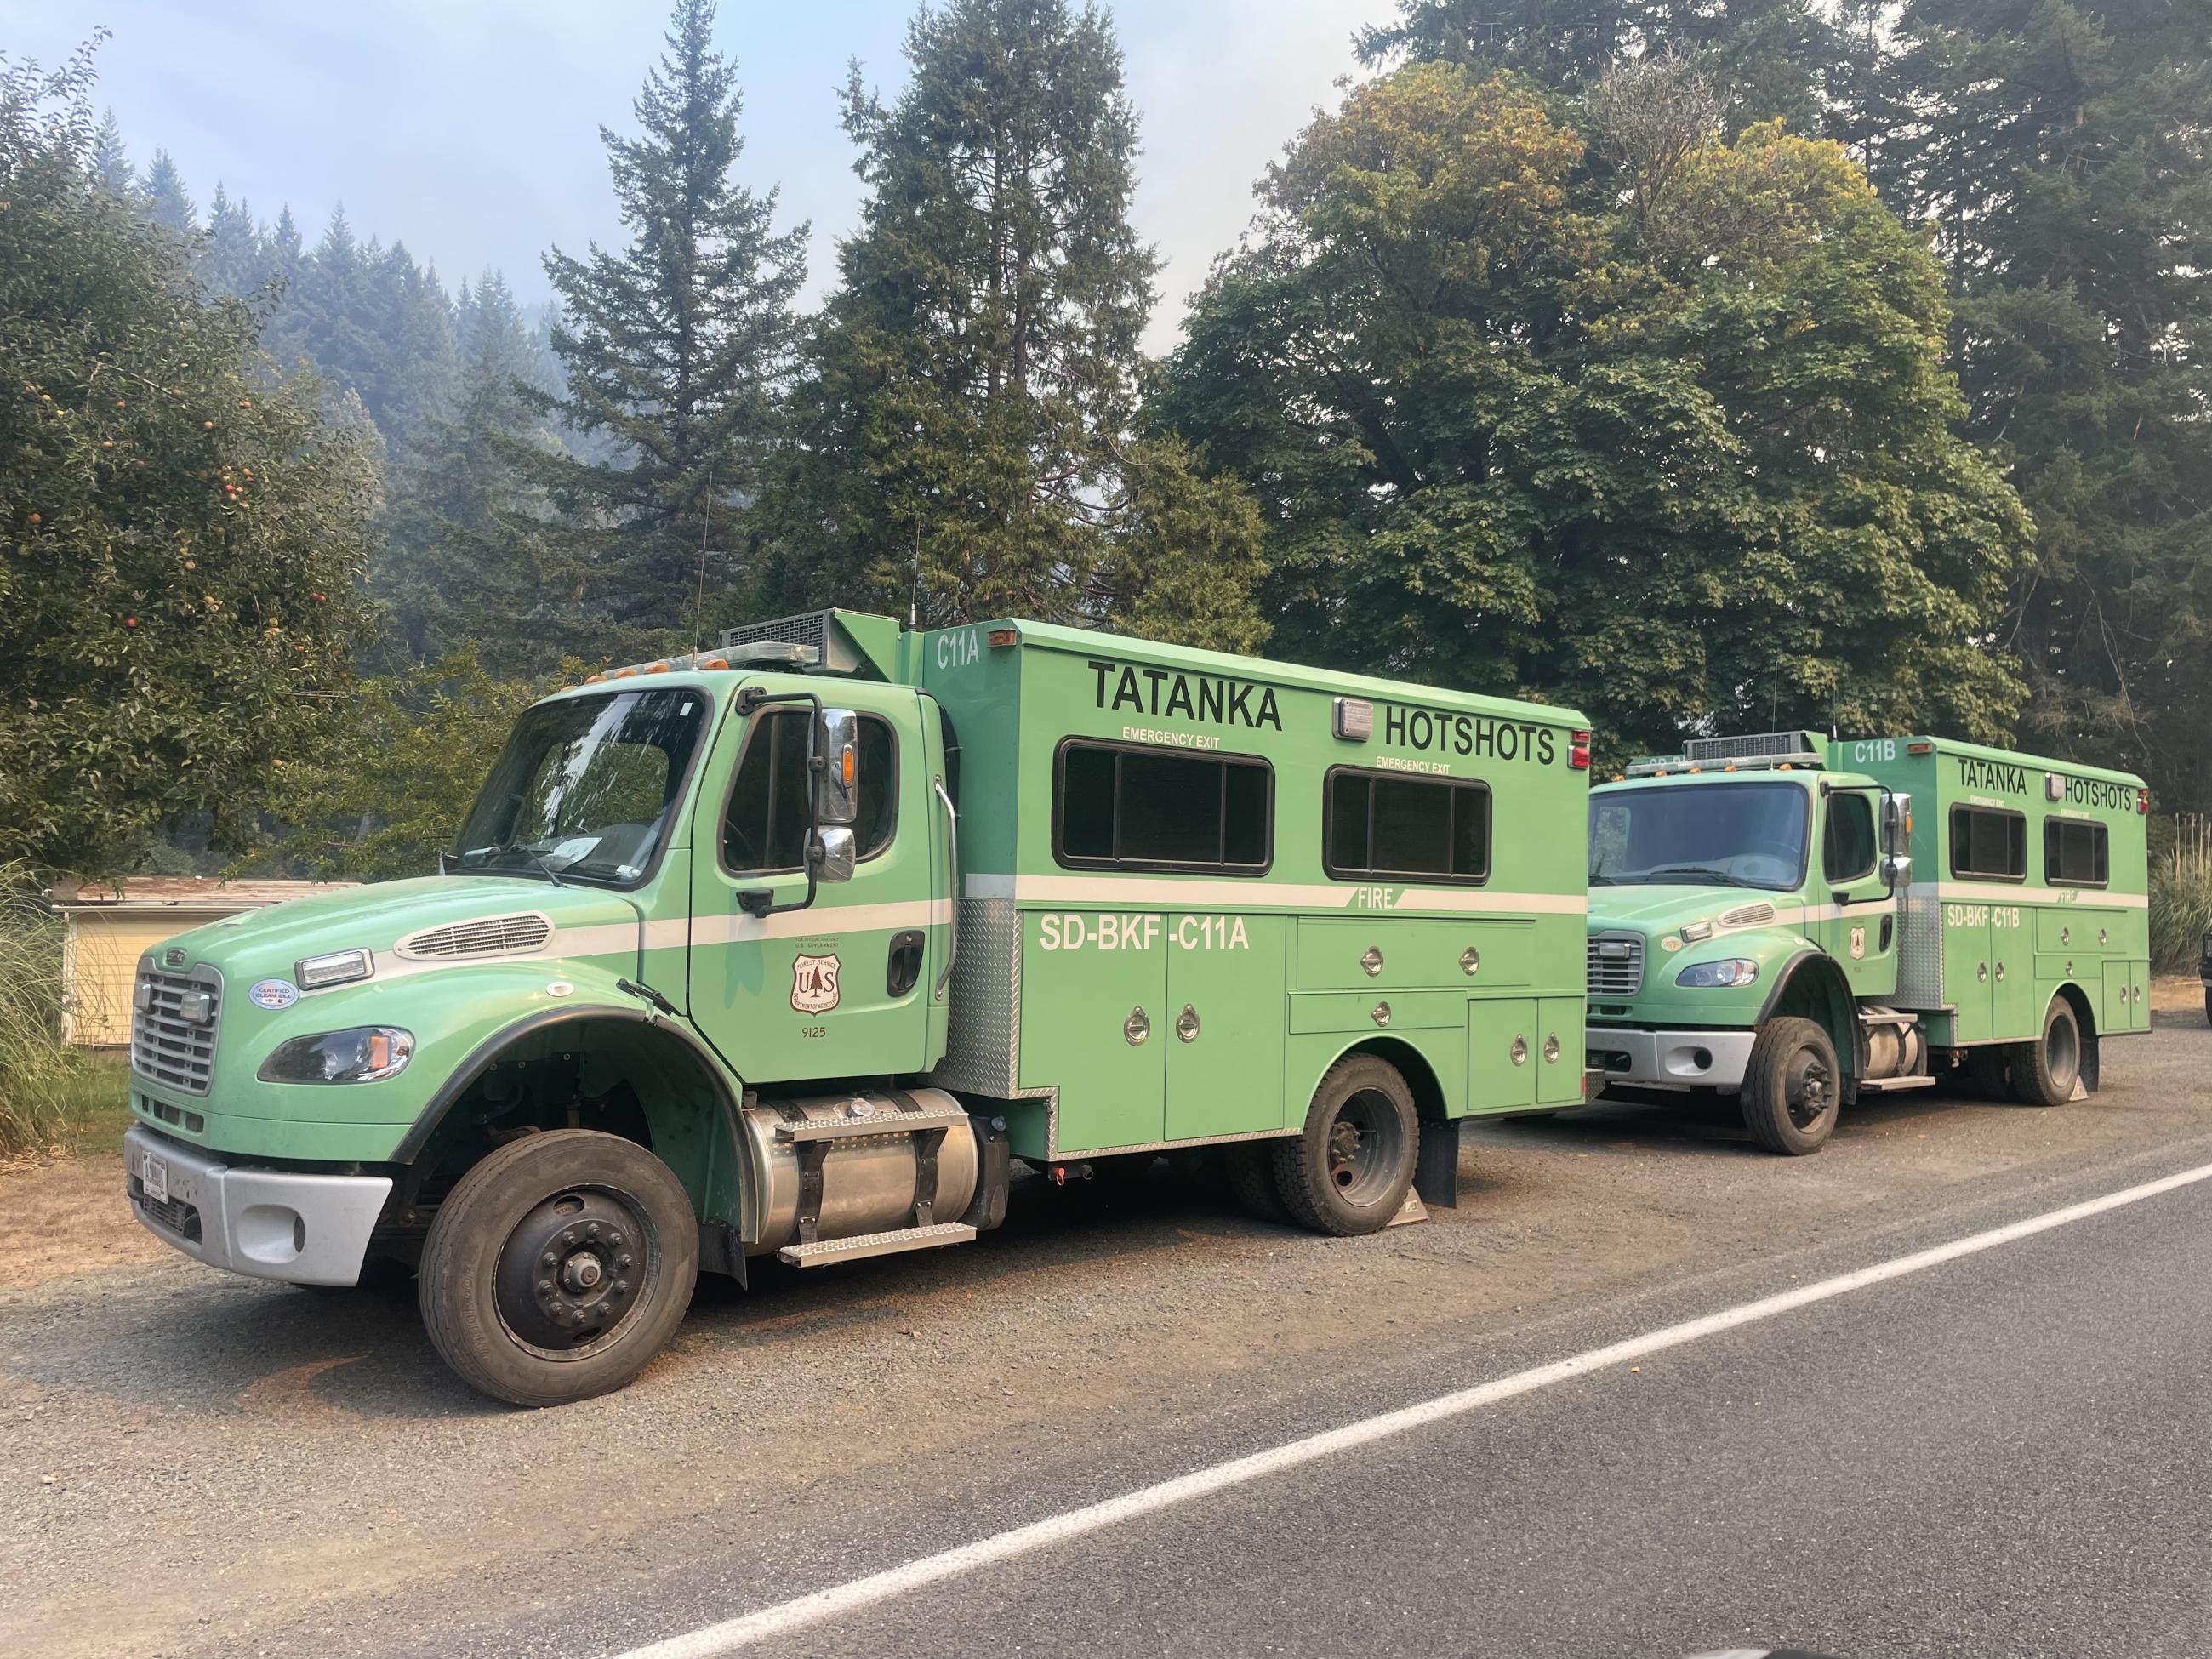 Two green fire trucks